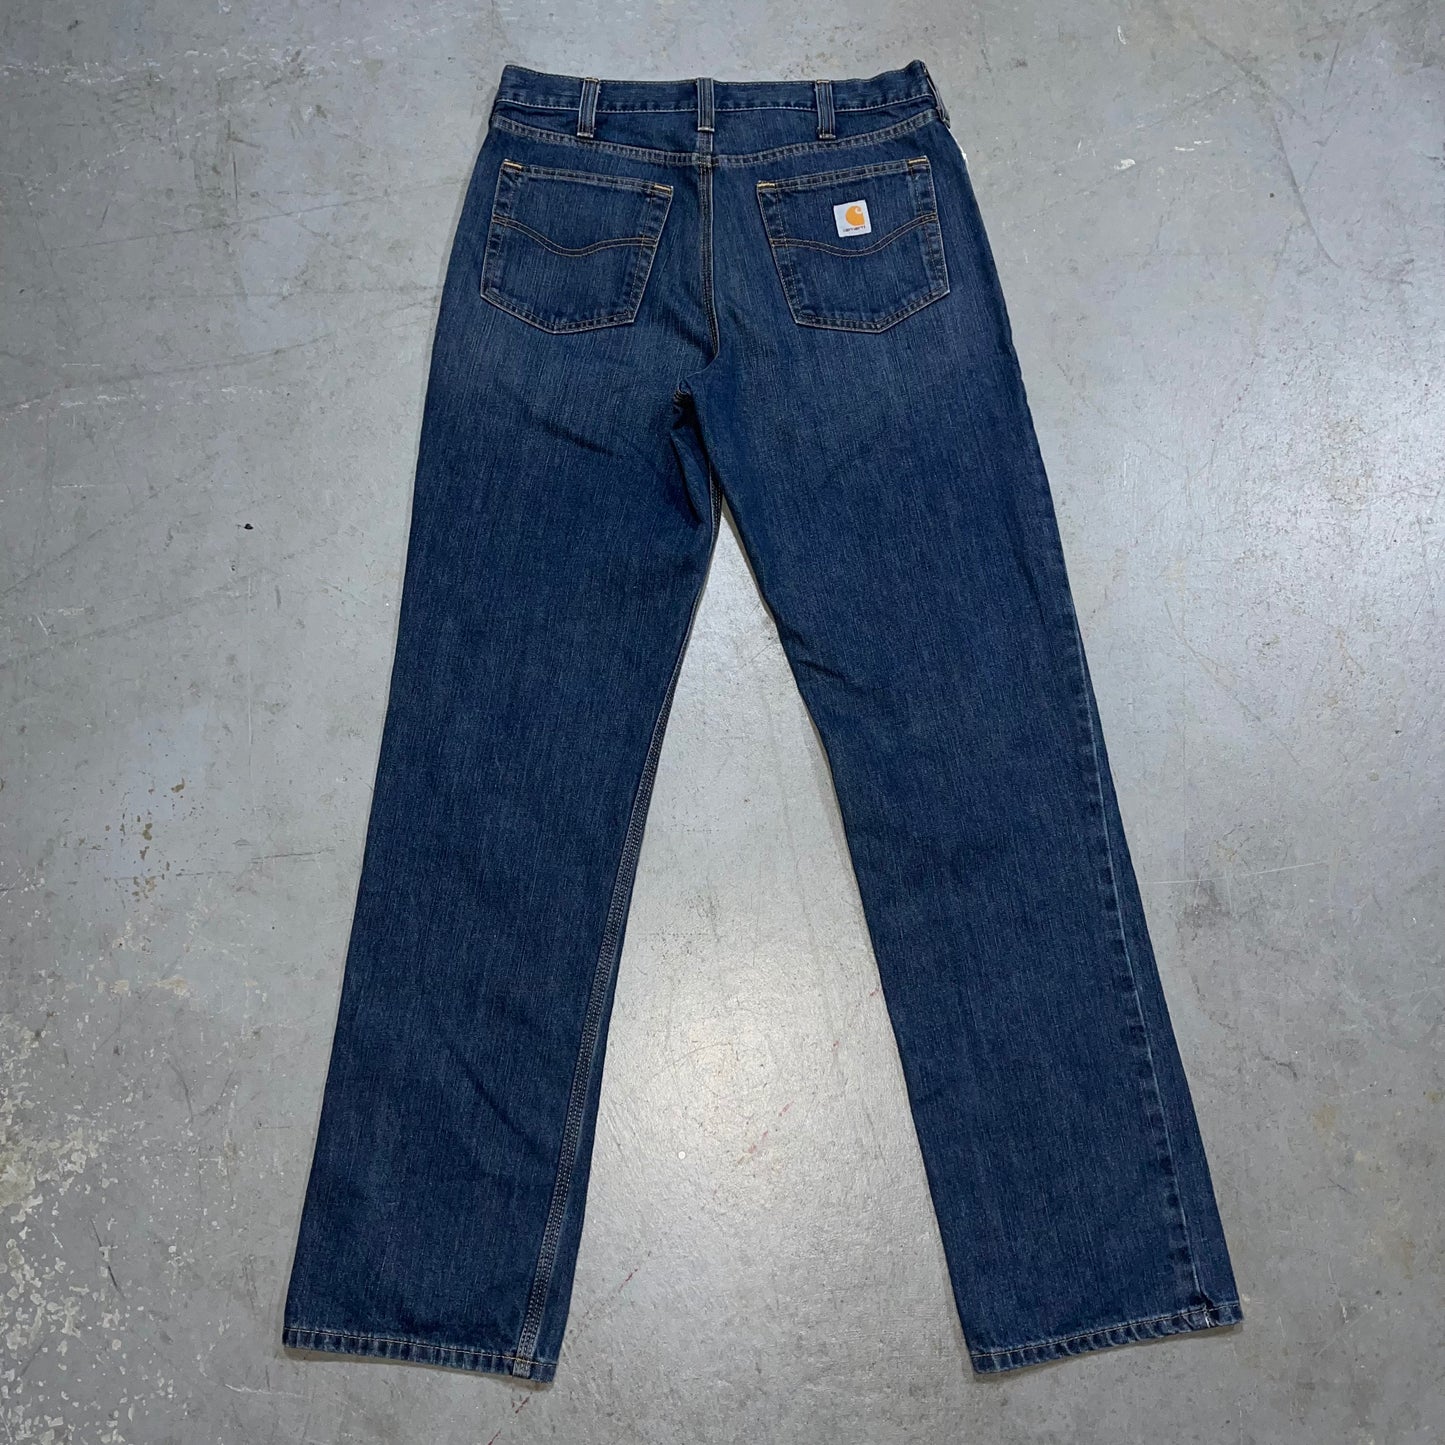 Carhartt Straight Leg Jeans. Size 34x36